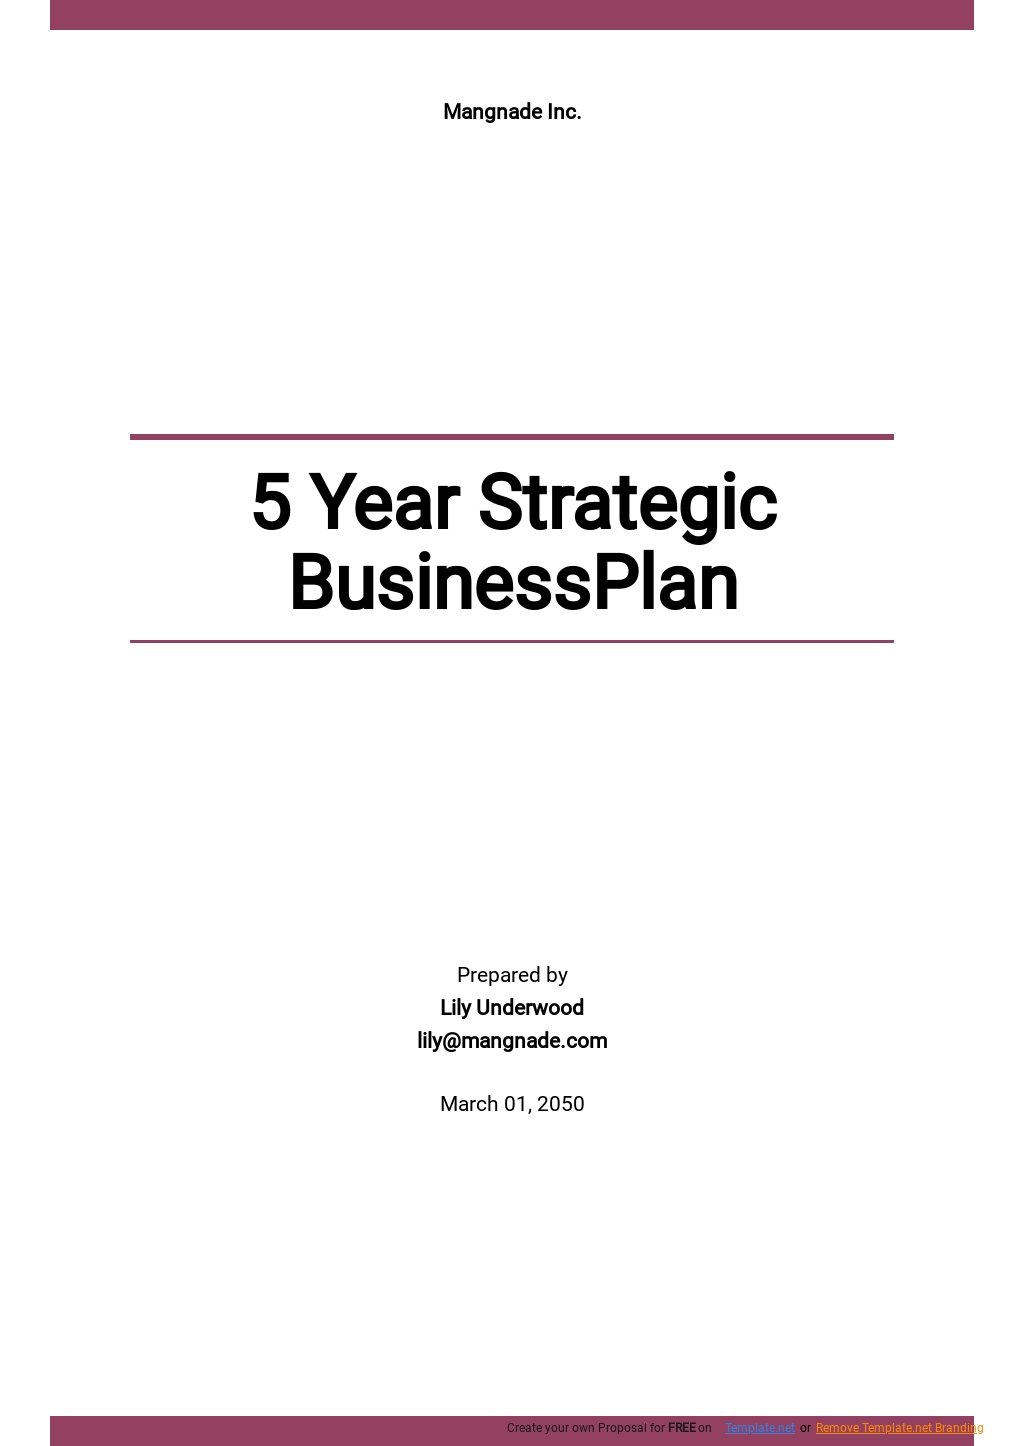 5 Year Strategic Business Plan Template